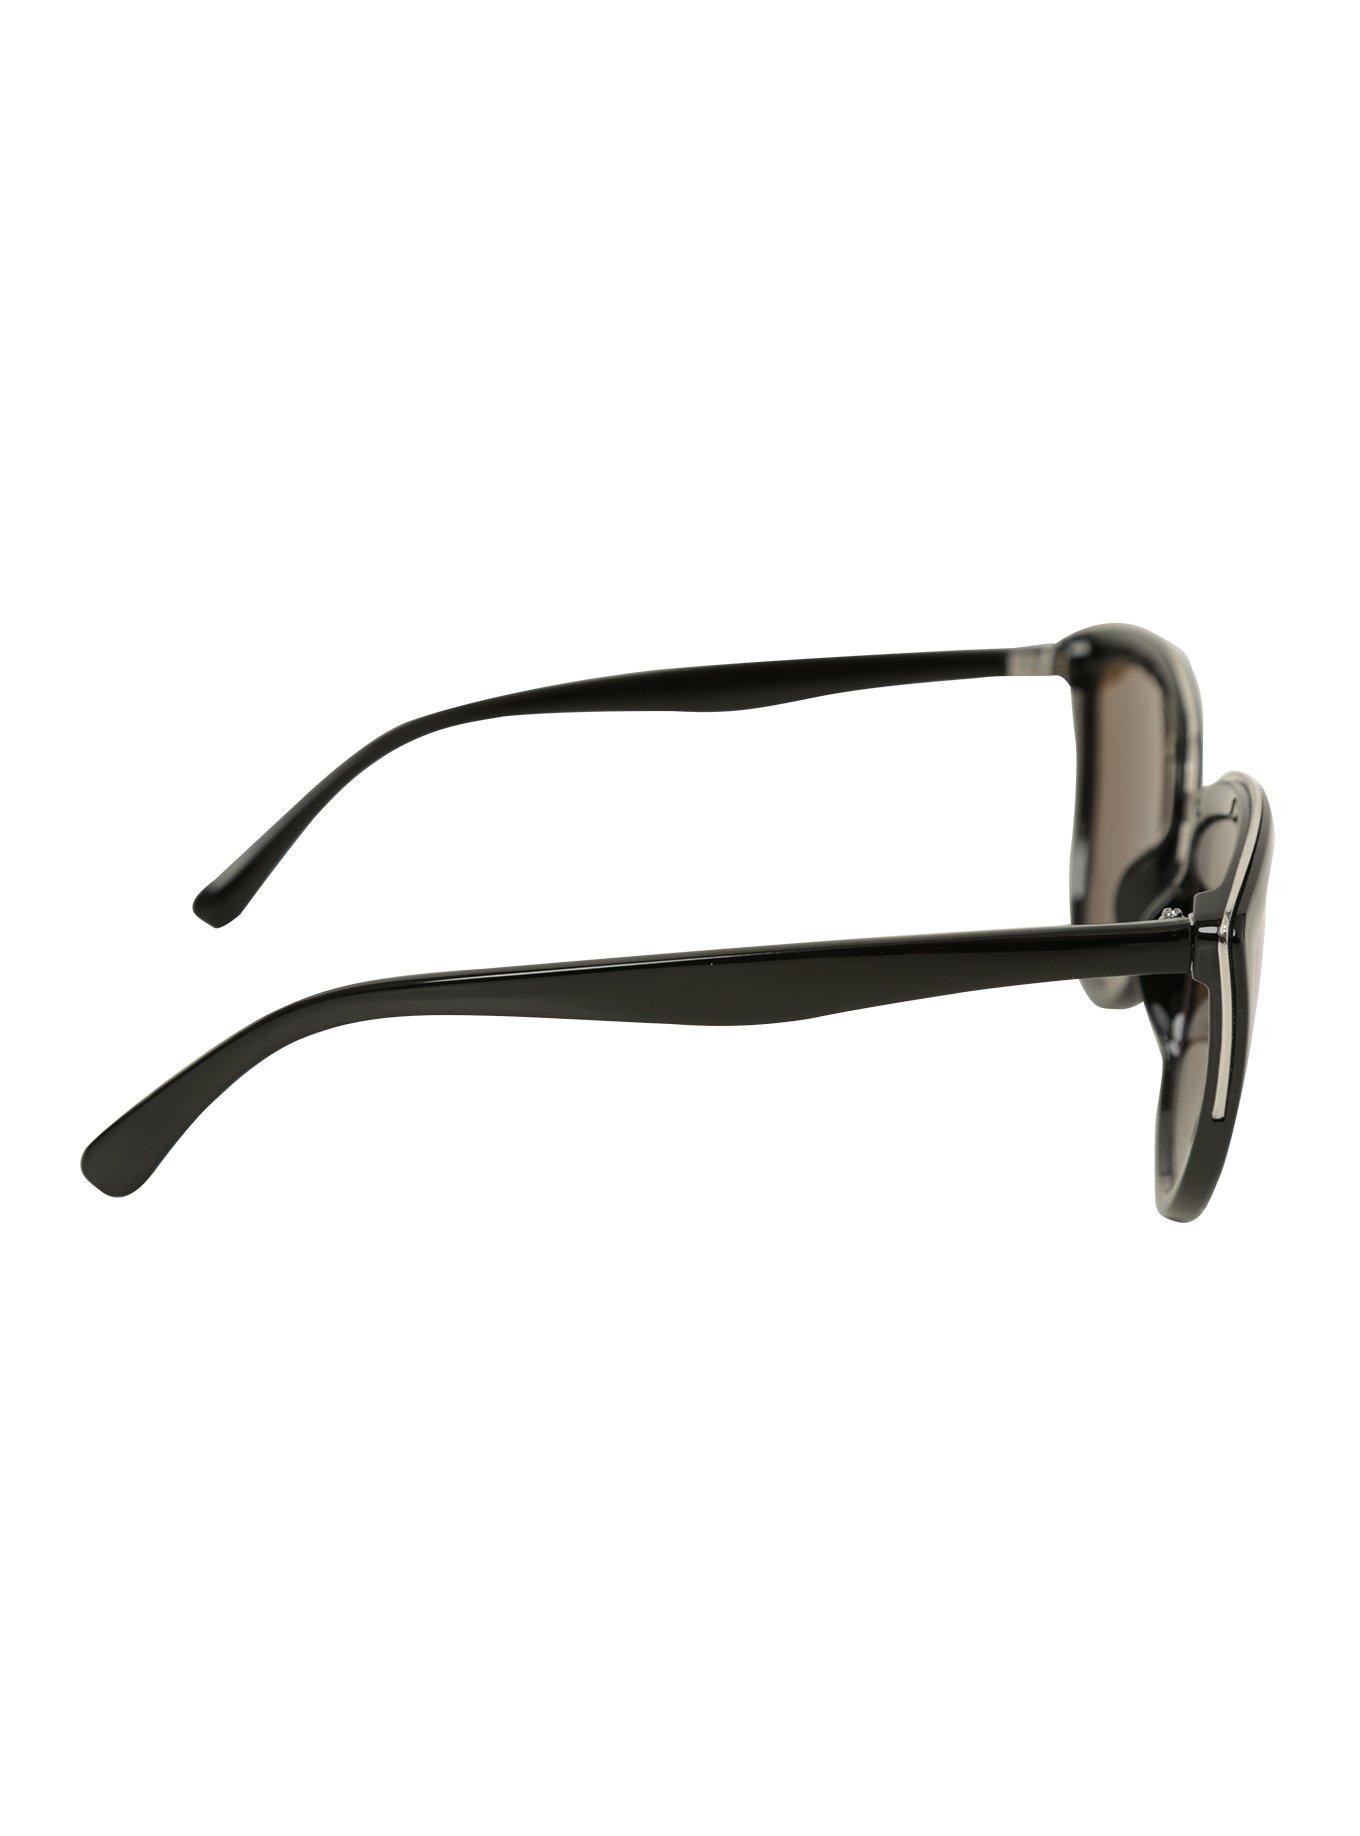 Black & Silver Metal Flash Lens Cat Eye Sunglasses, , alternate